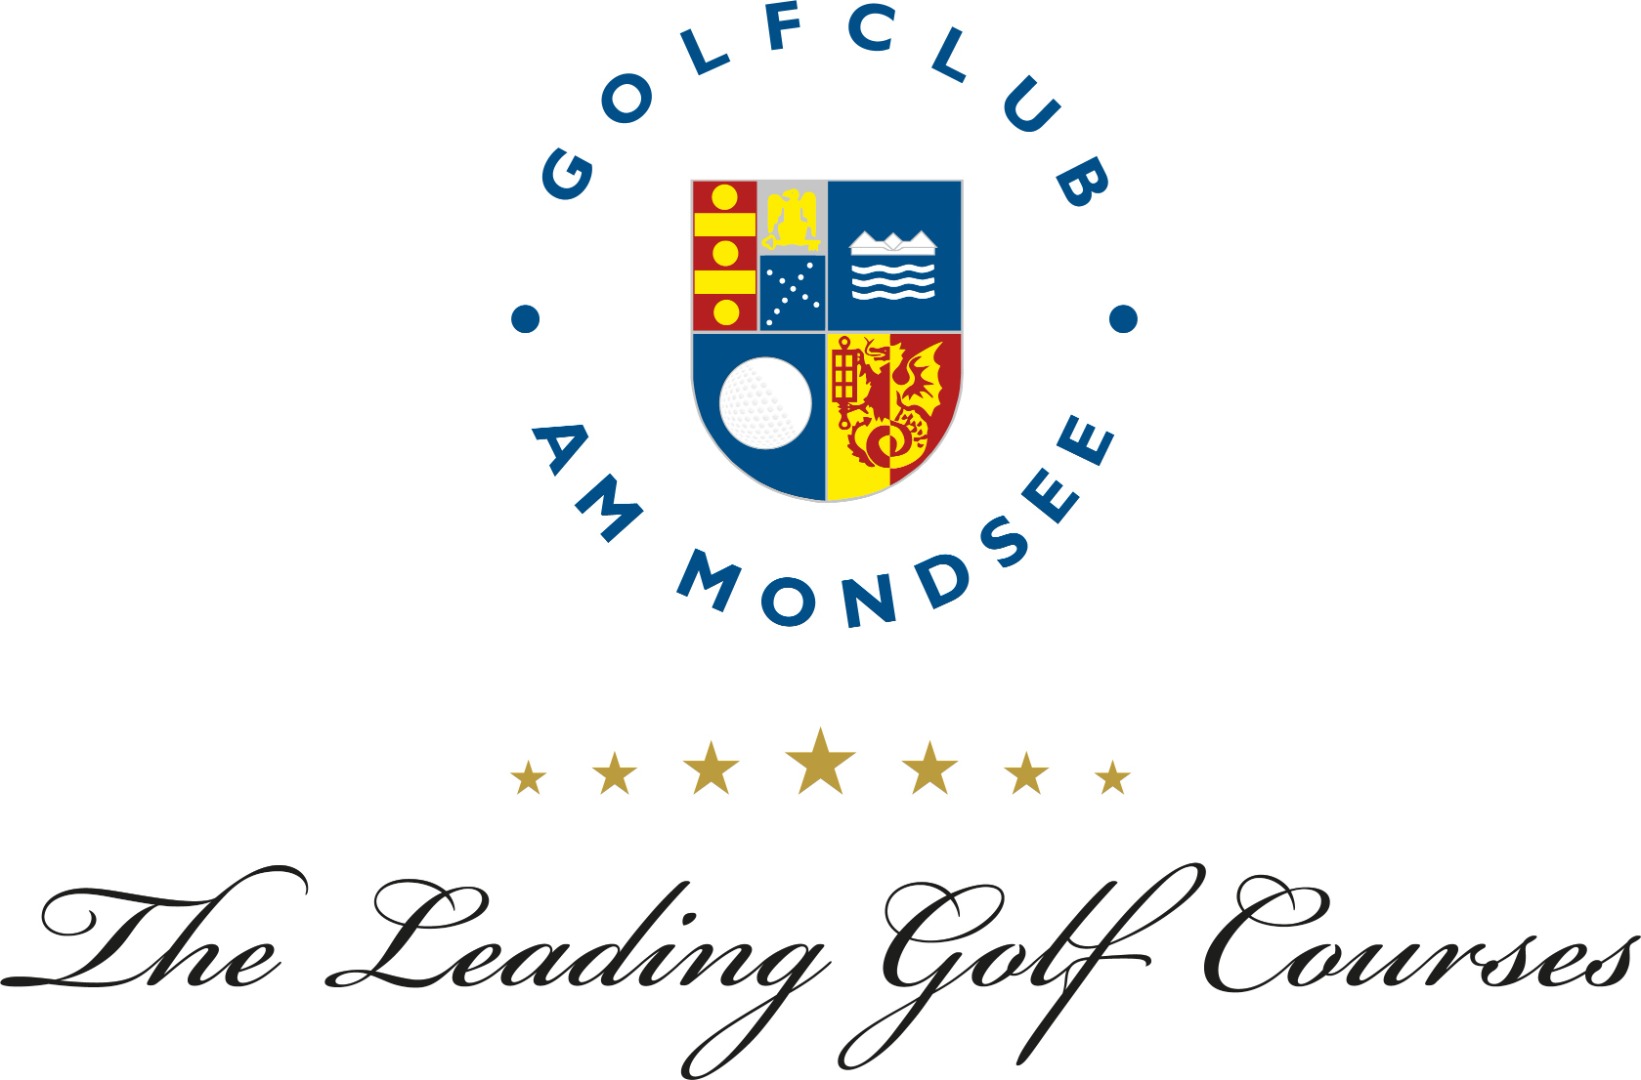 Golfclub Am Mondsee